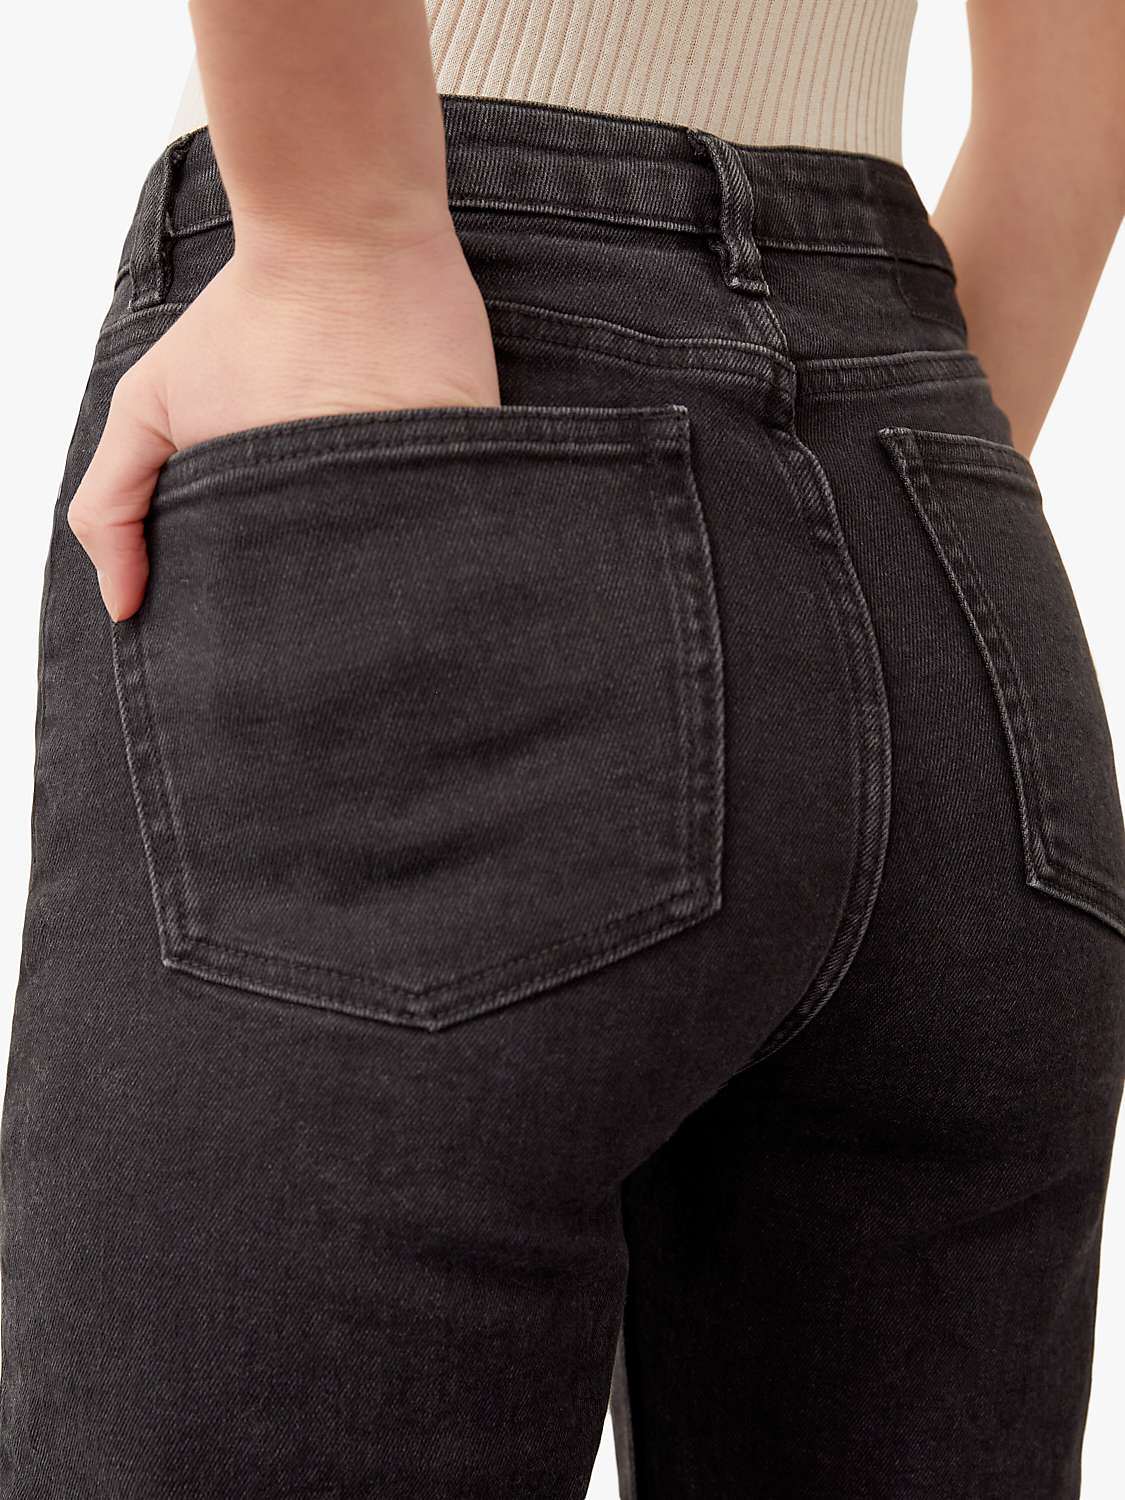 Buy Jigsaw Lea Crop Jeans, Washed Black Online at johnlewis.com